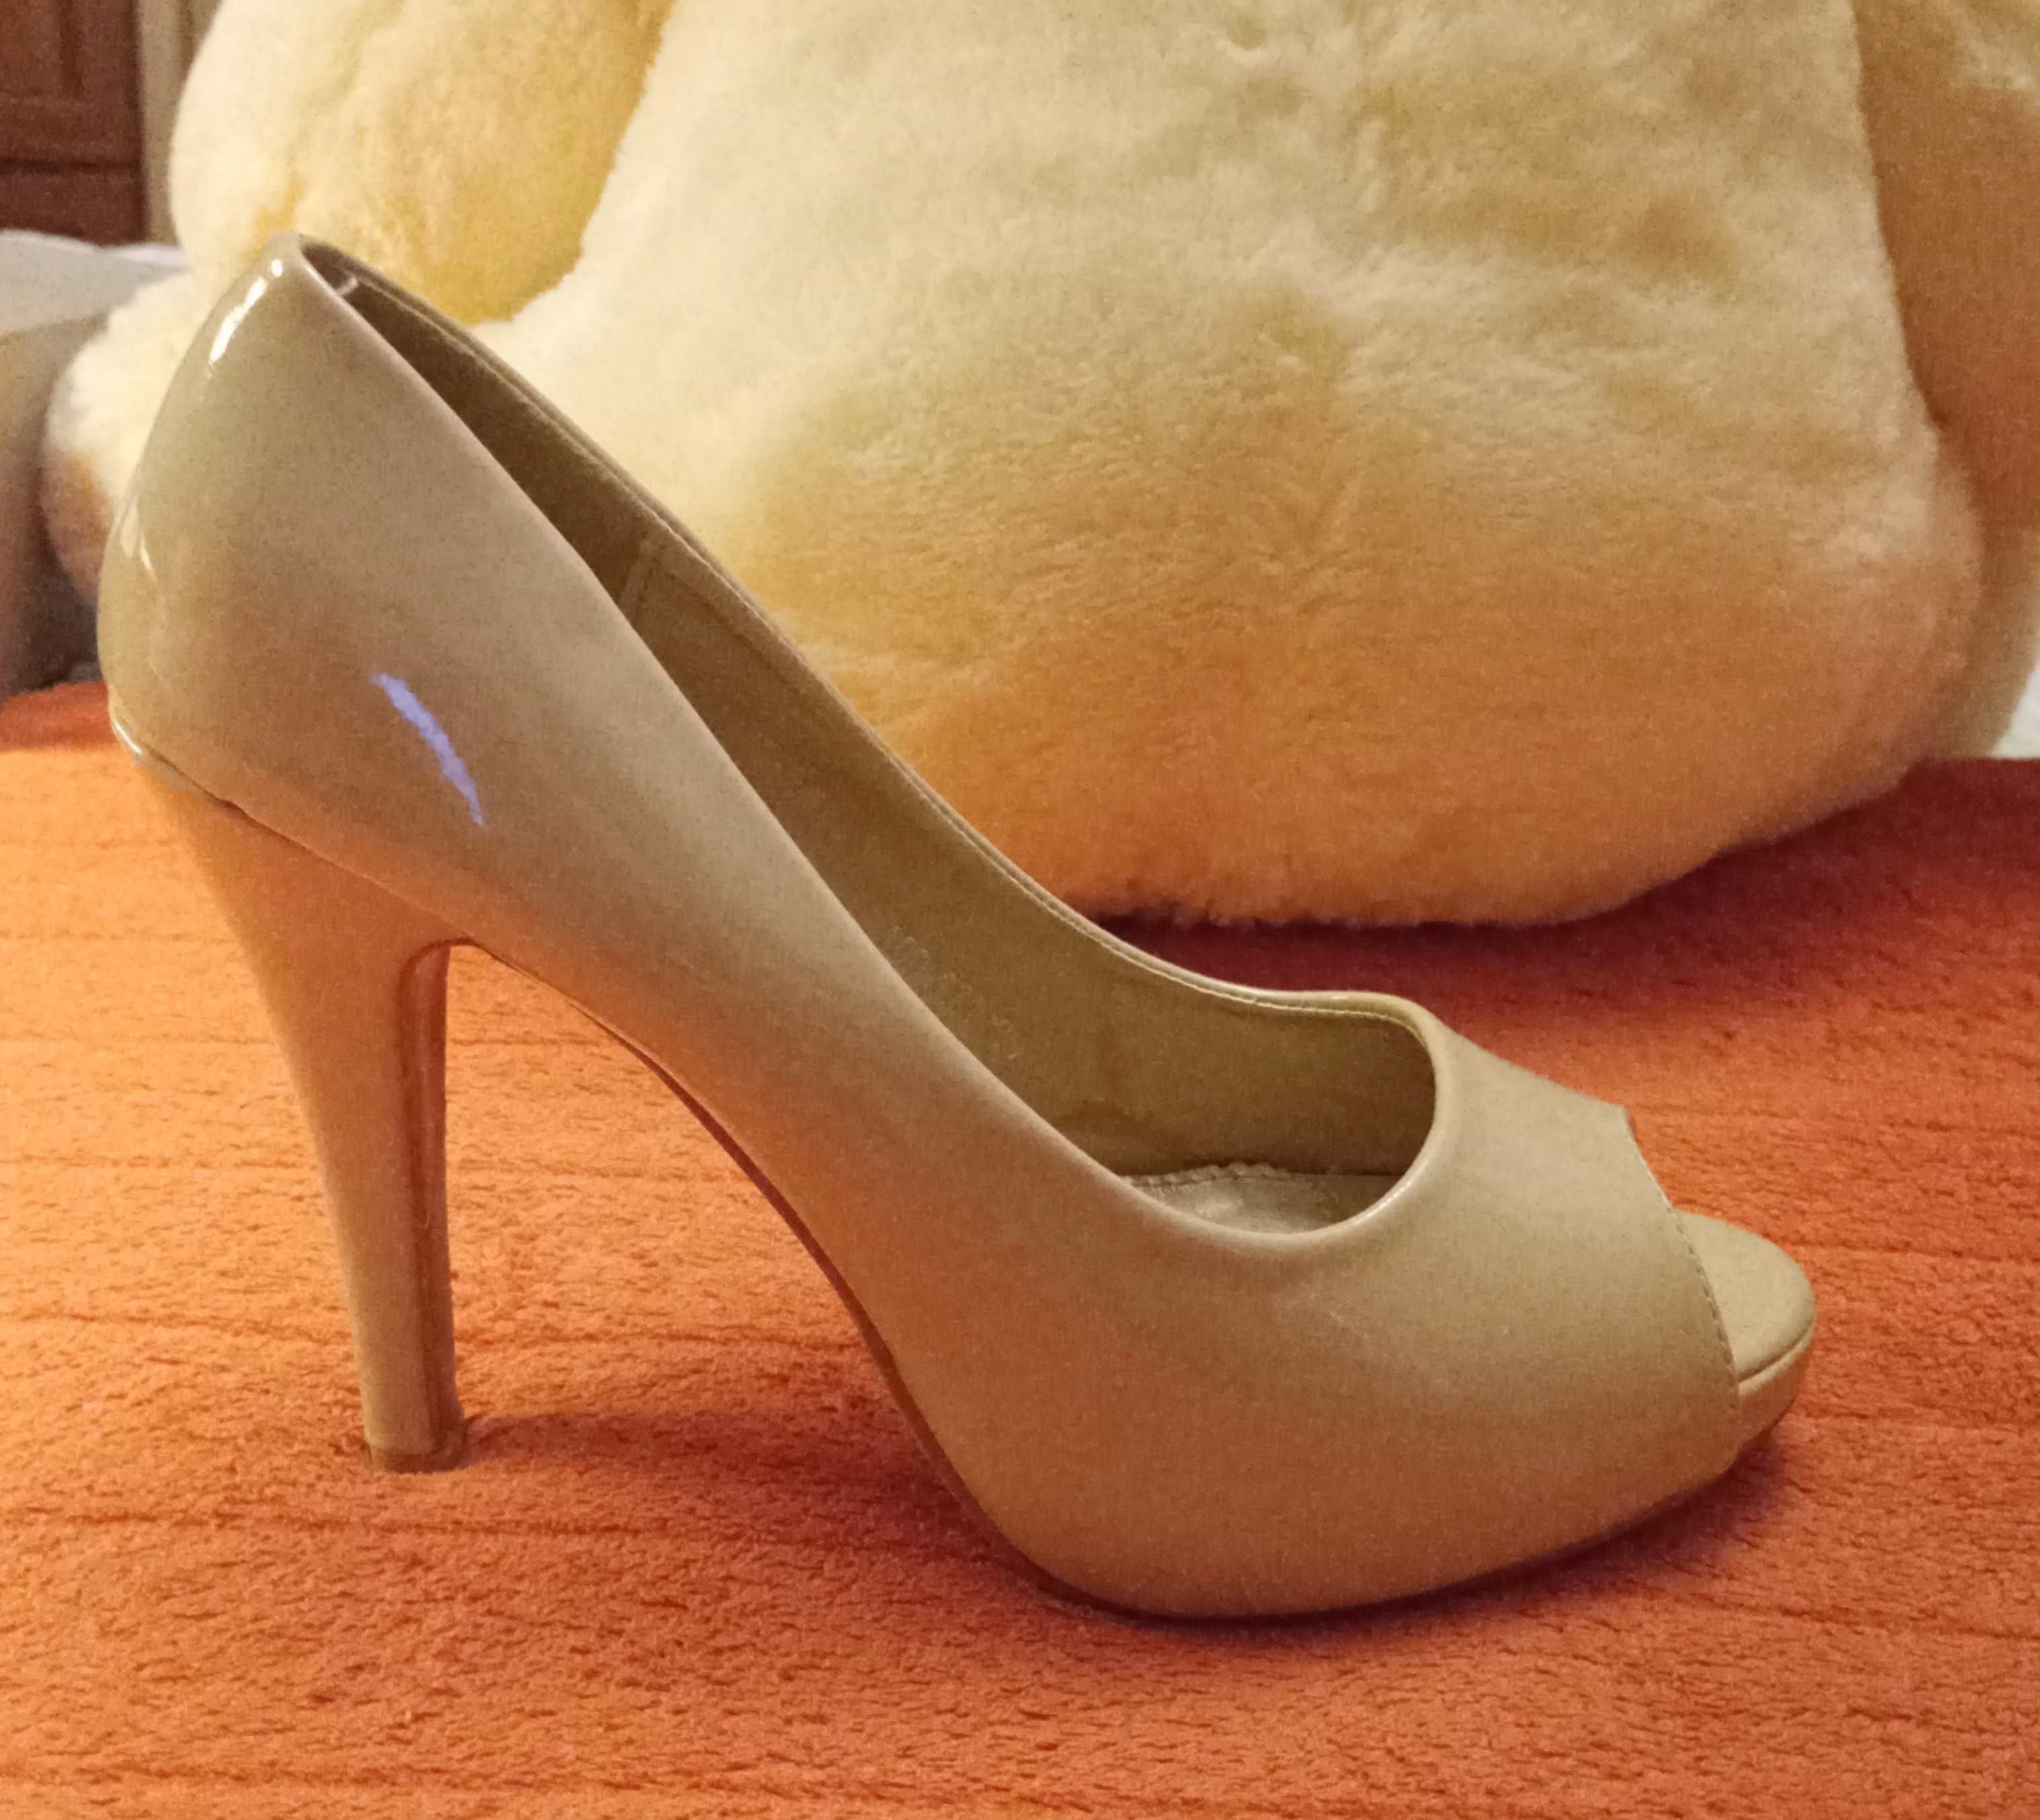 czółenka buty półbuty damskie szpilka r. 39, obcas 11 cm